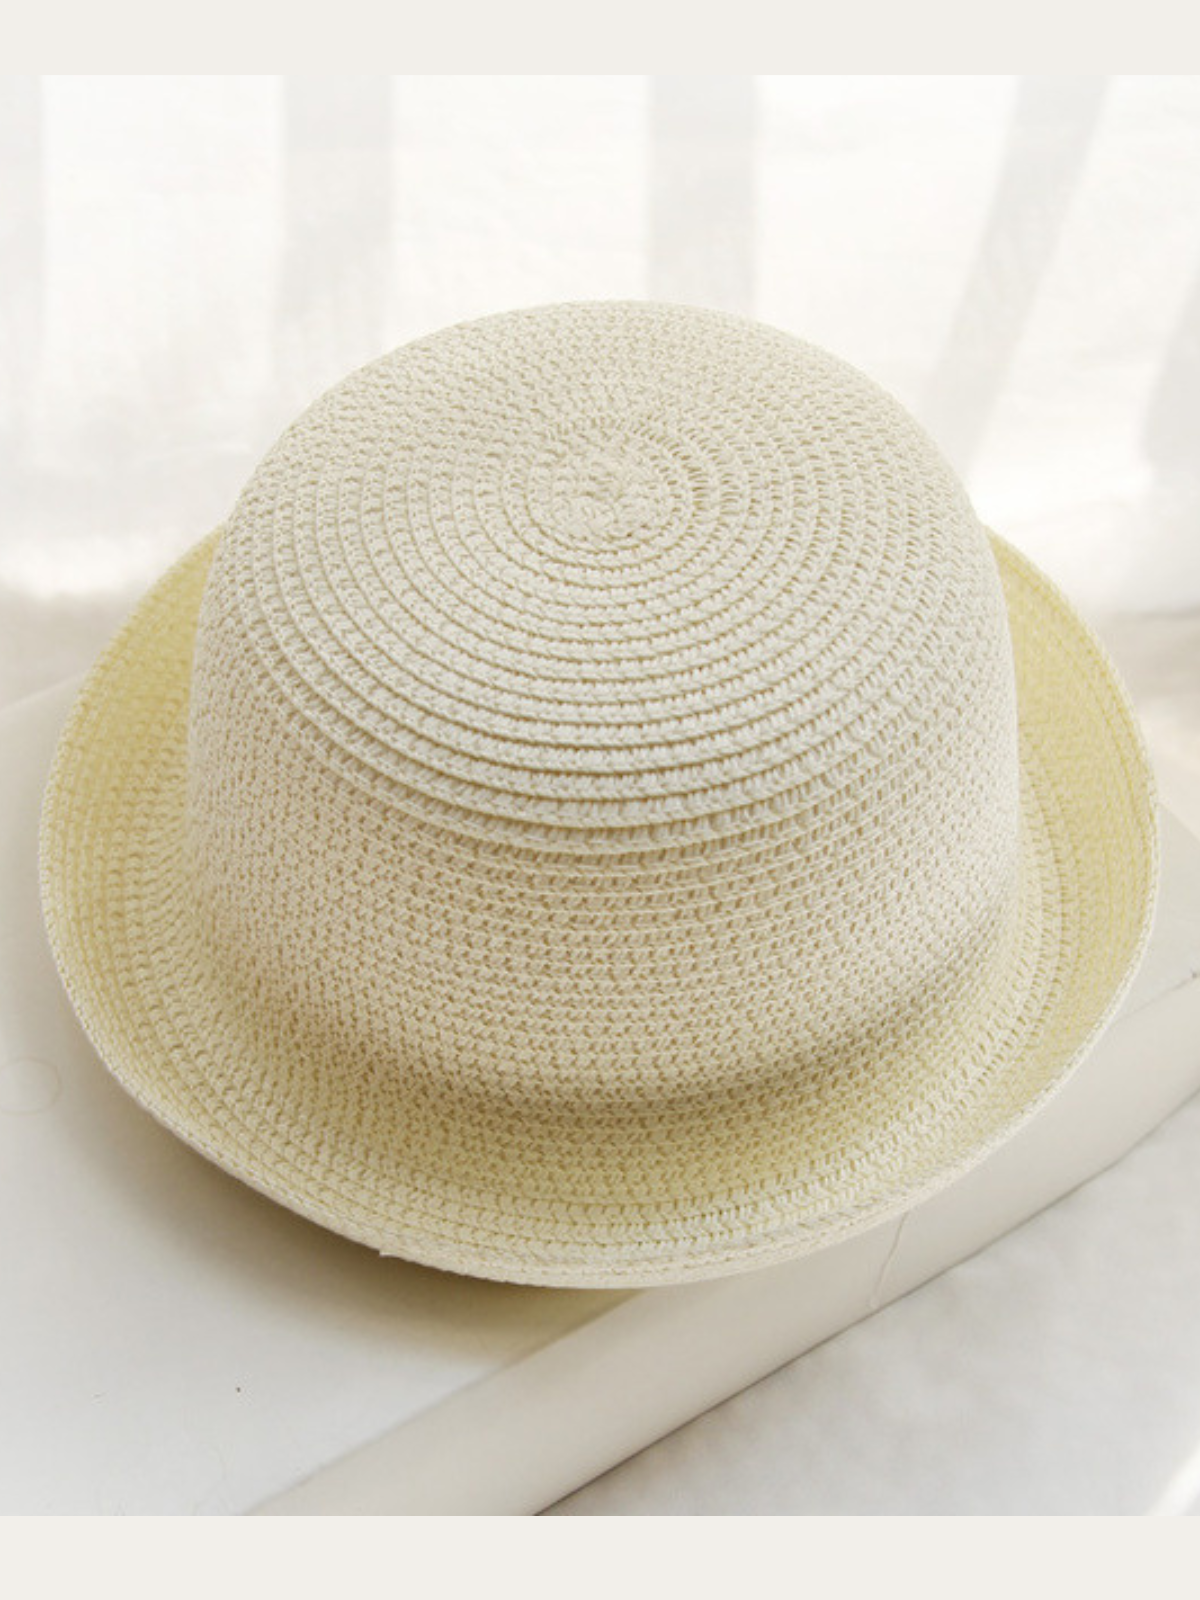 Runway-Ready White Bowler Hat